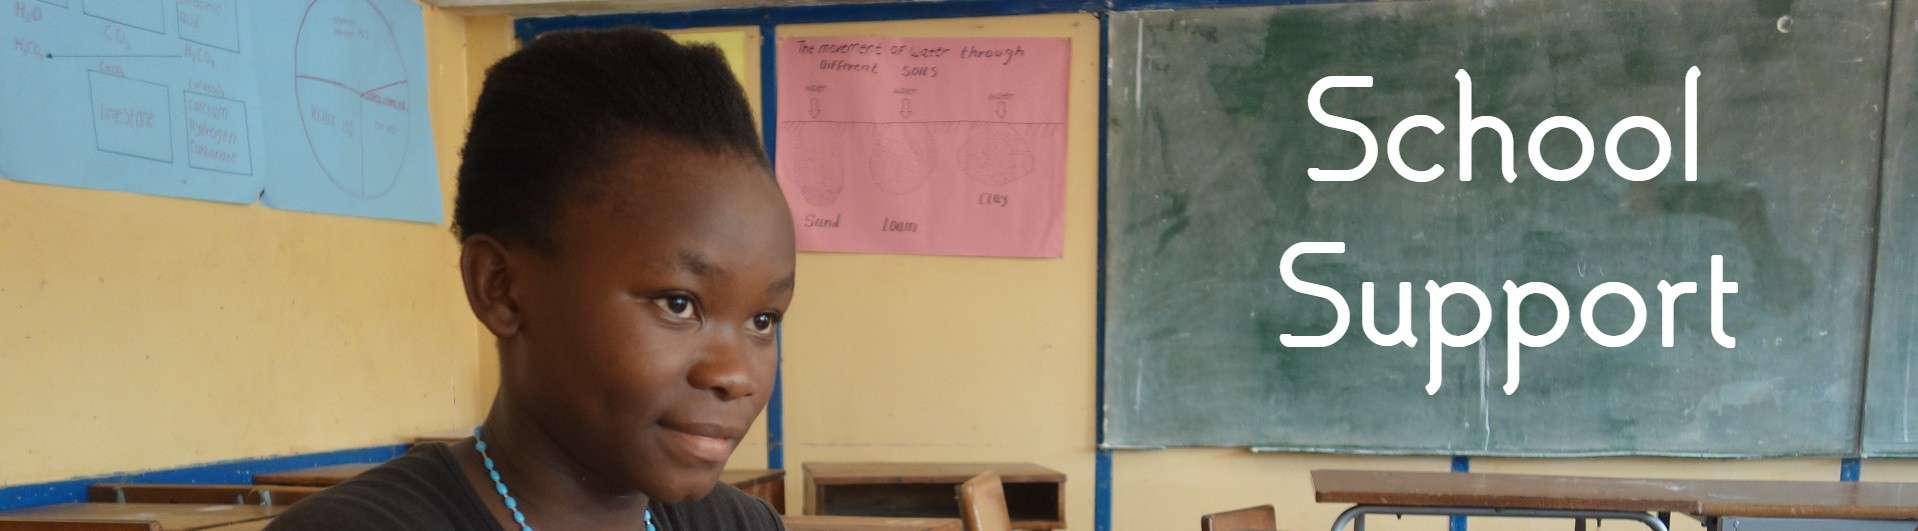 school support vulnerable Zambian girls